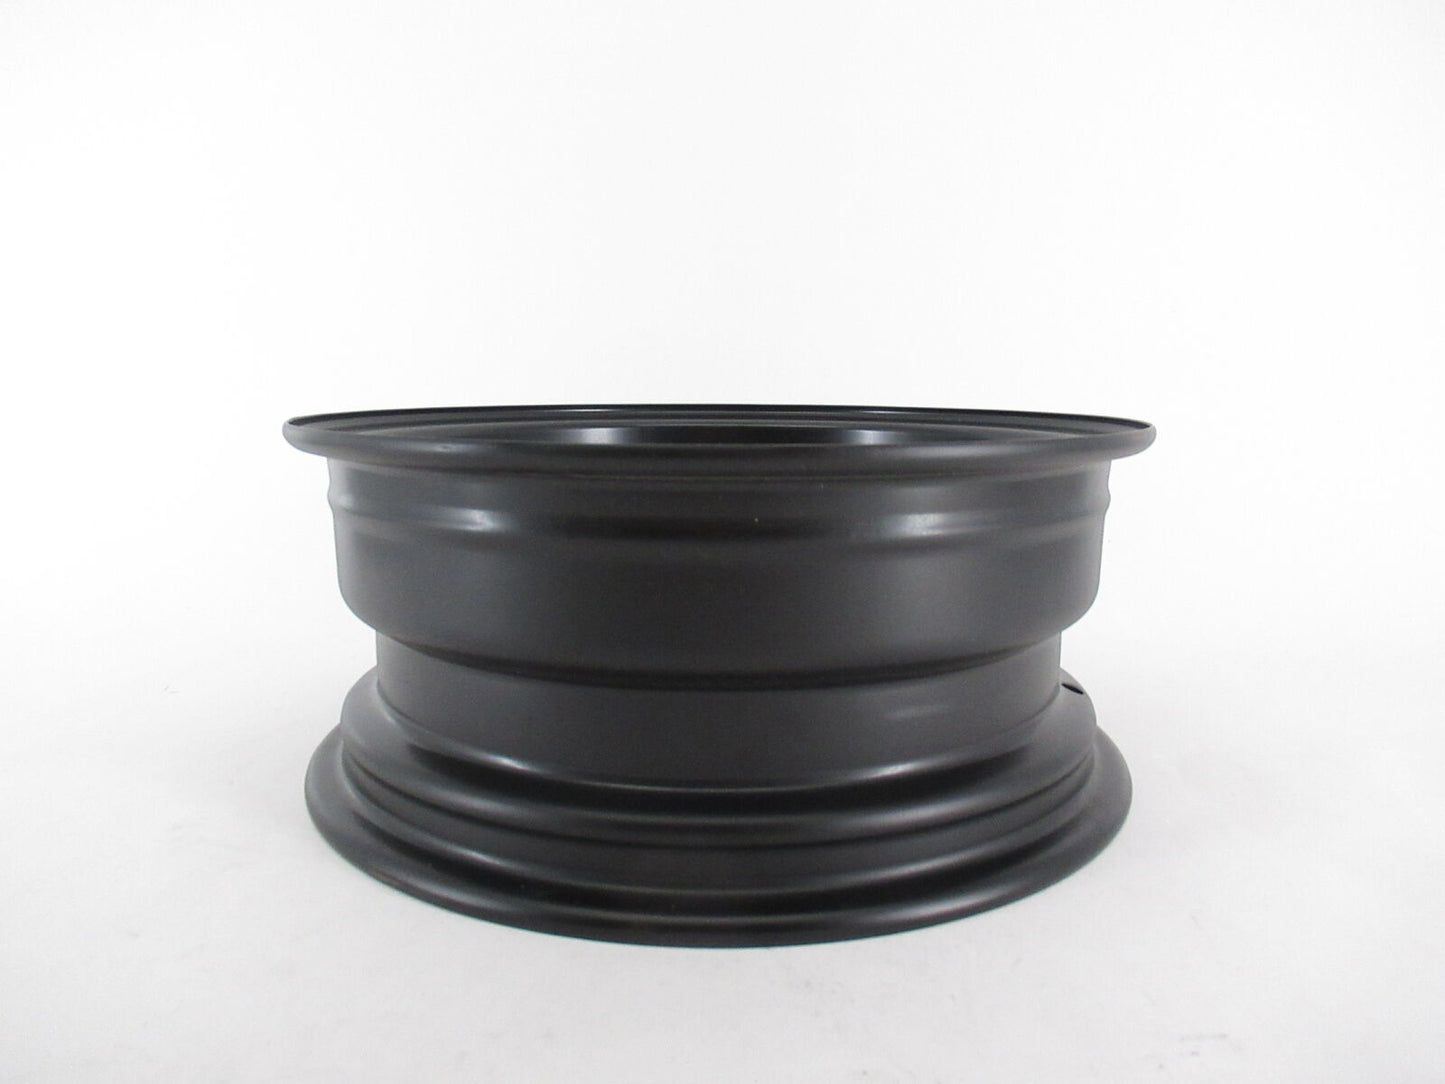 15" Black Steel Rim - Corolla 4261102880SW